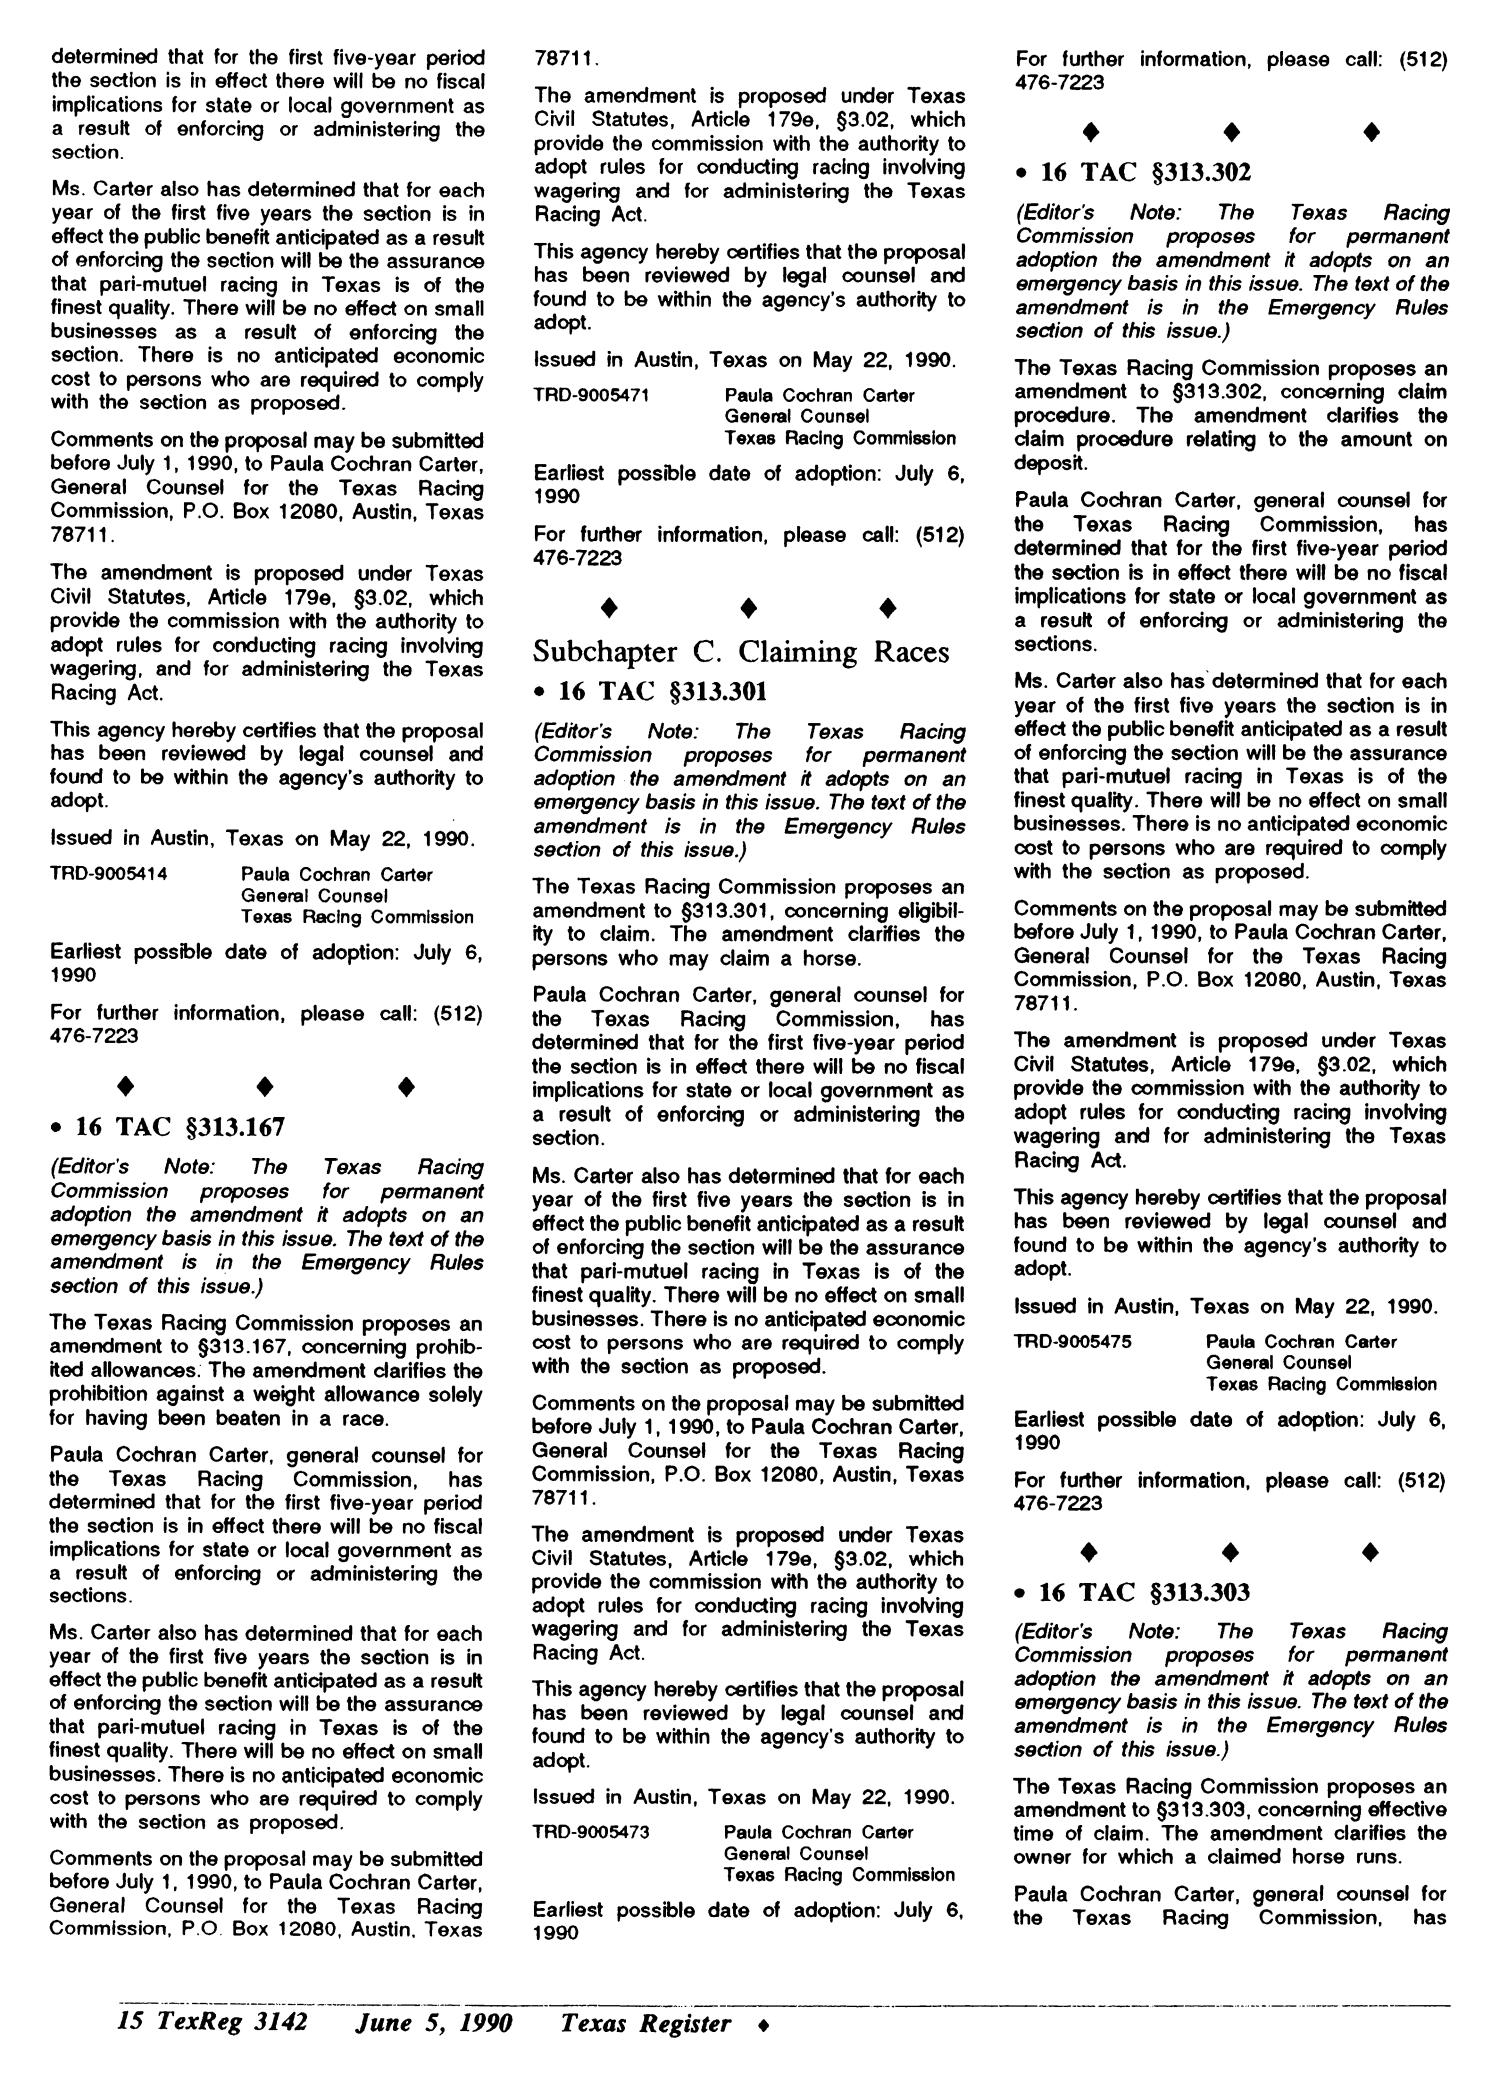 Texas Register, Volume 15, Number 42, (Volume II)Pages 3121-3269, June 5, 1990
                                                
                                                    3142
                                                